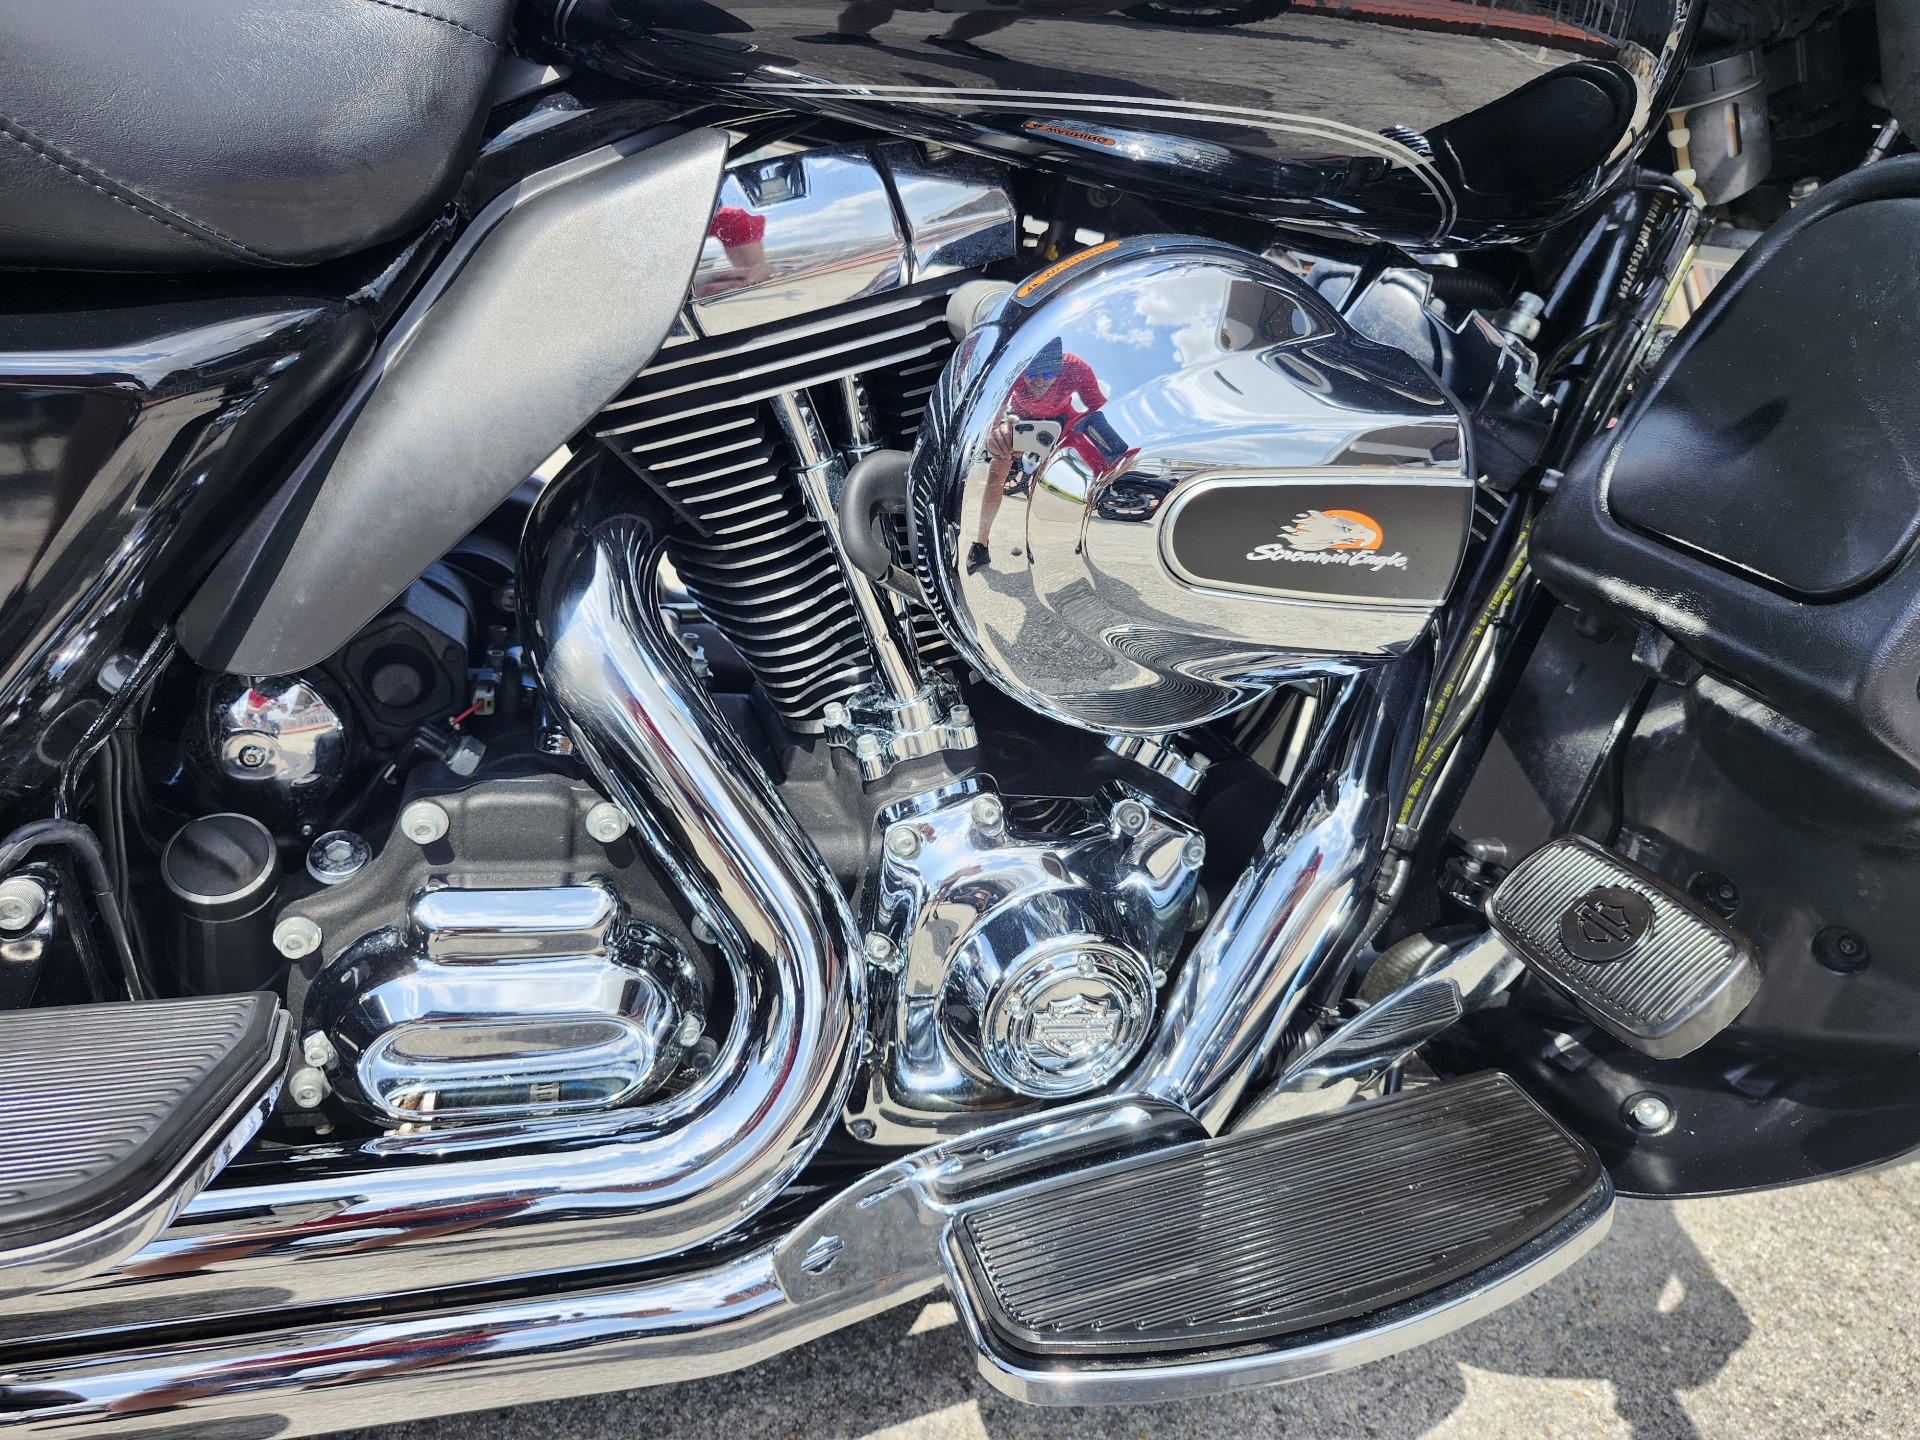 2014 Harley-Davidson Tri Glide® Ultra in Fort Myers, Florida - Photo 6